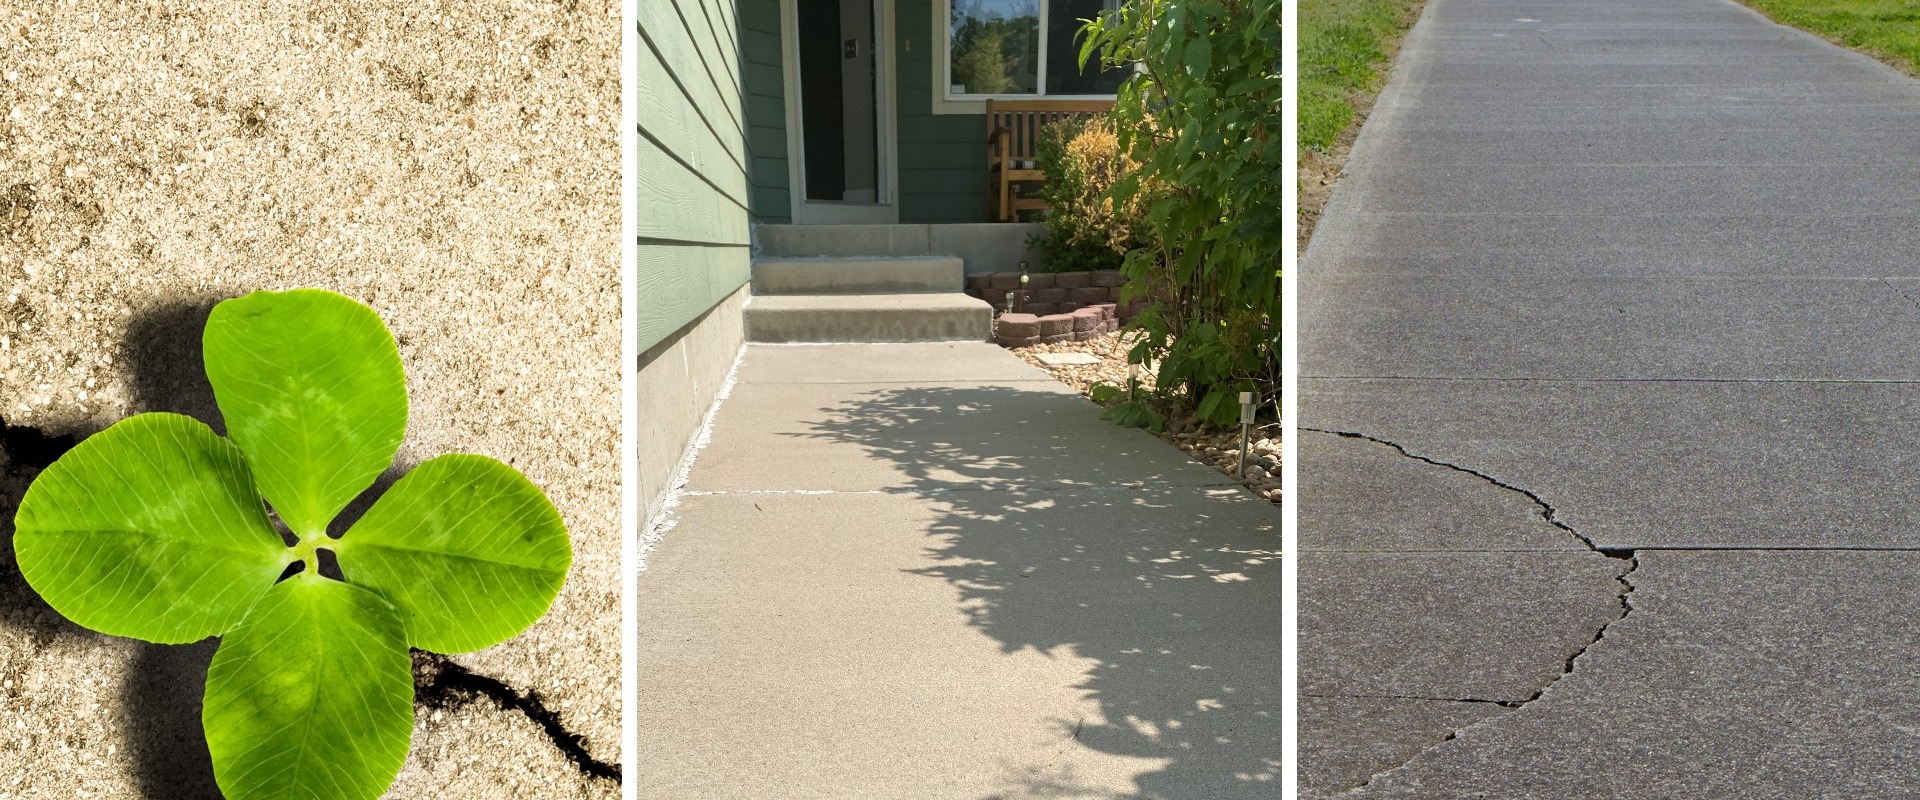 How long should a concrete driveway last before cracking?